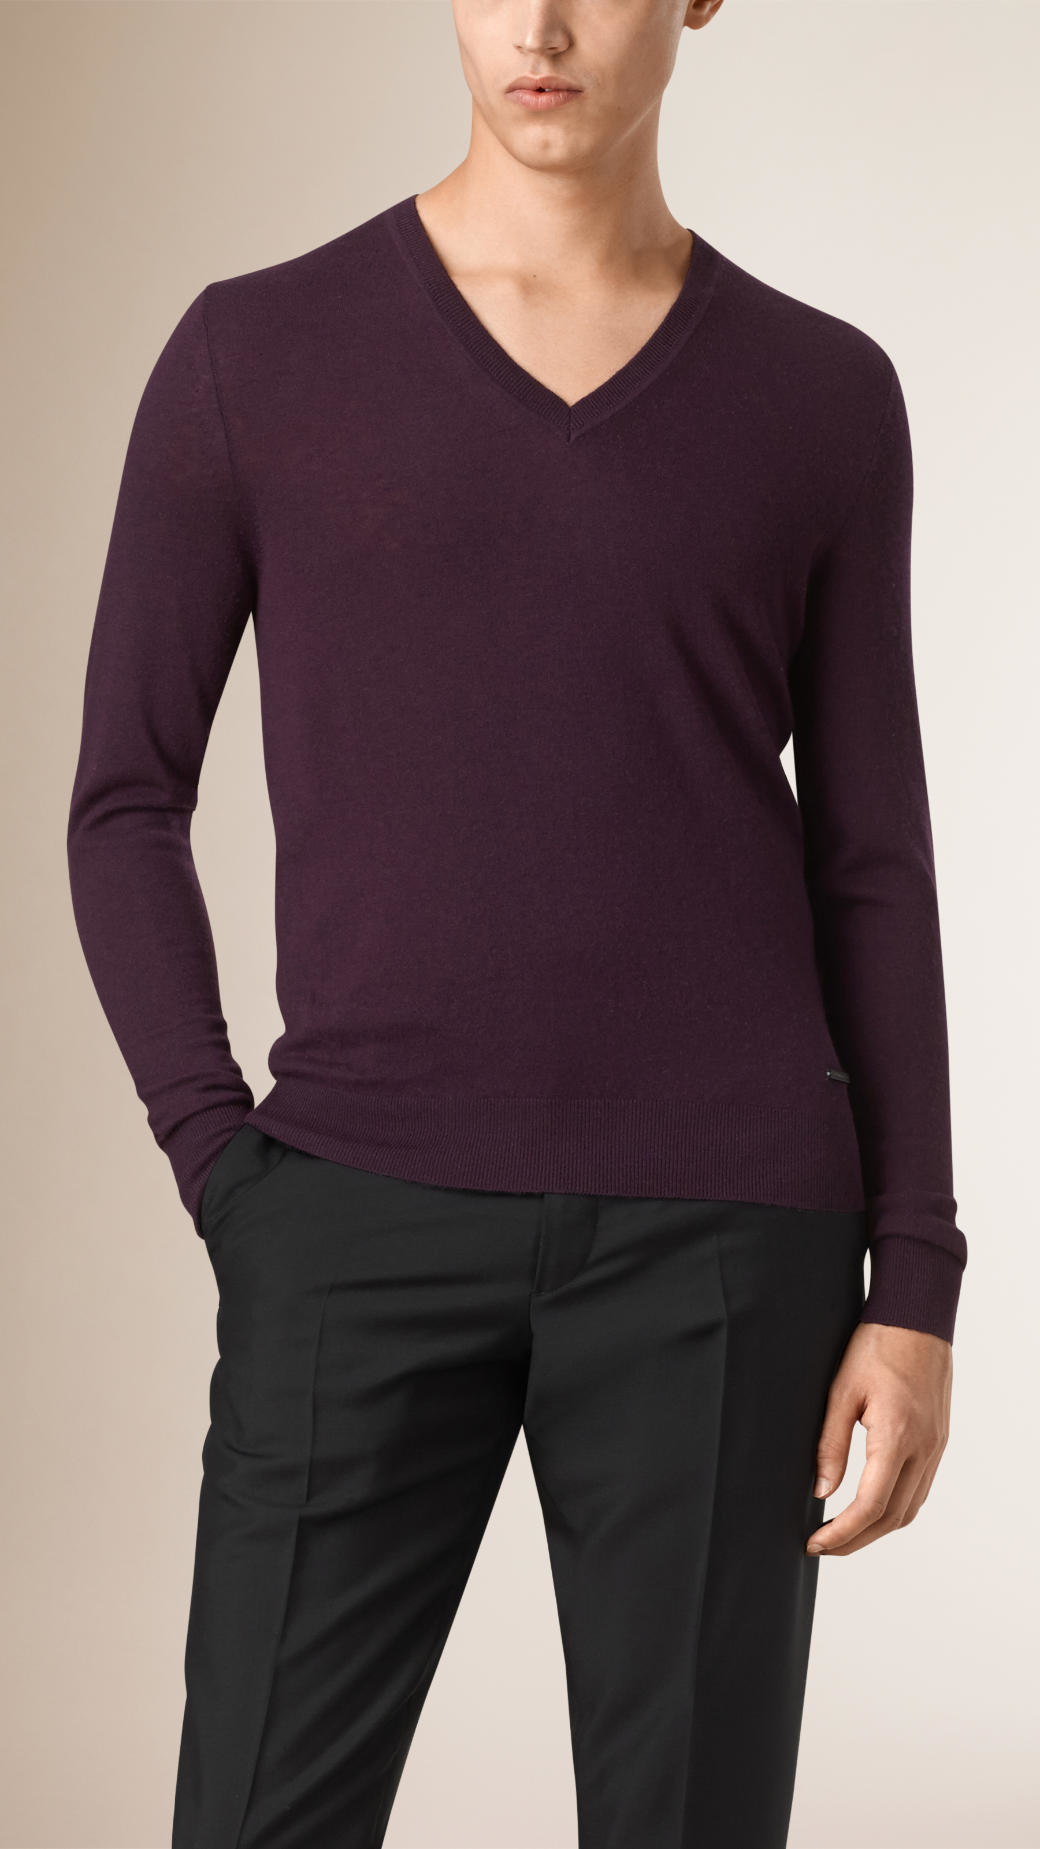 Burberry Cashmere V-neck Sweater Burgundy Black in Purple for Men - Lyst